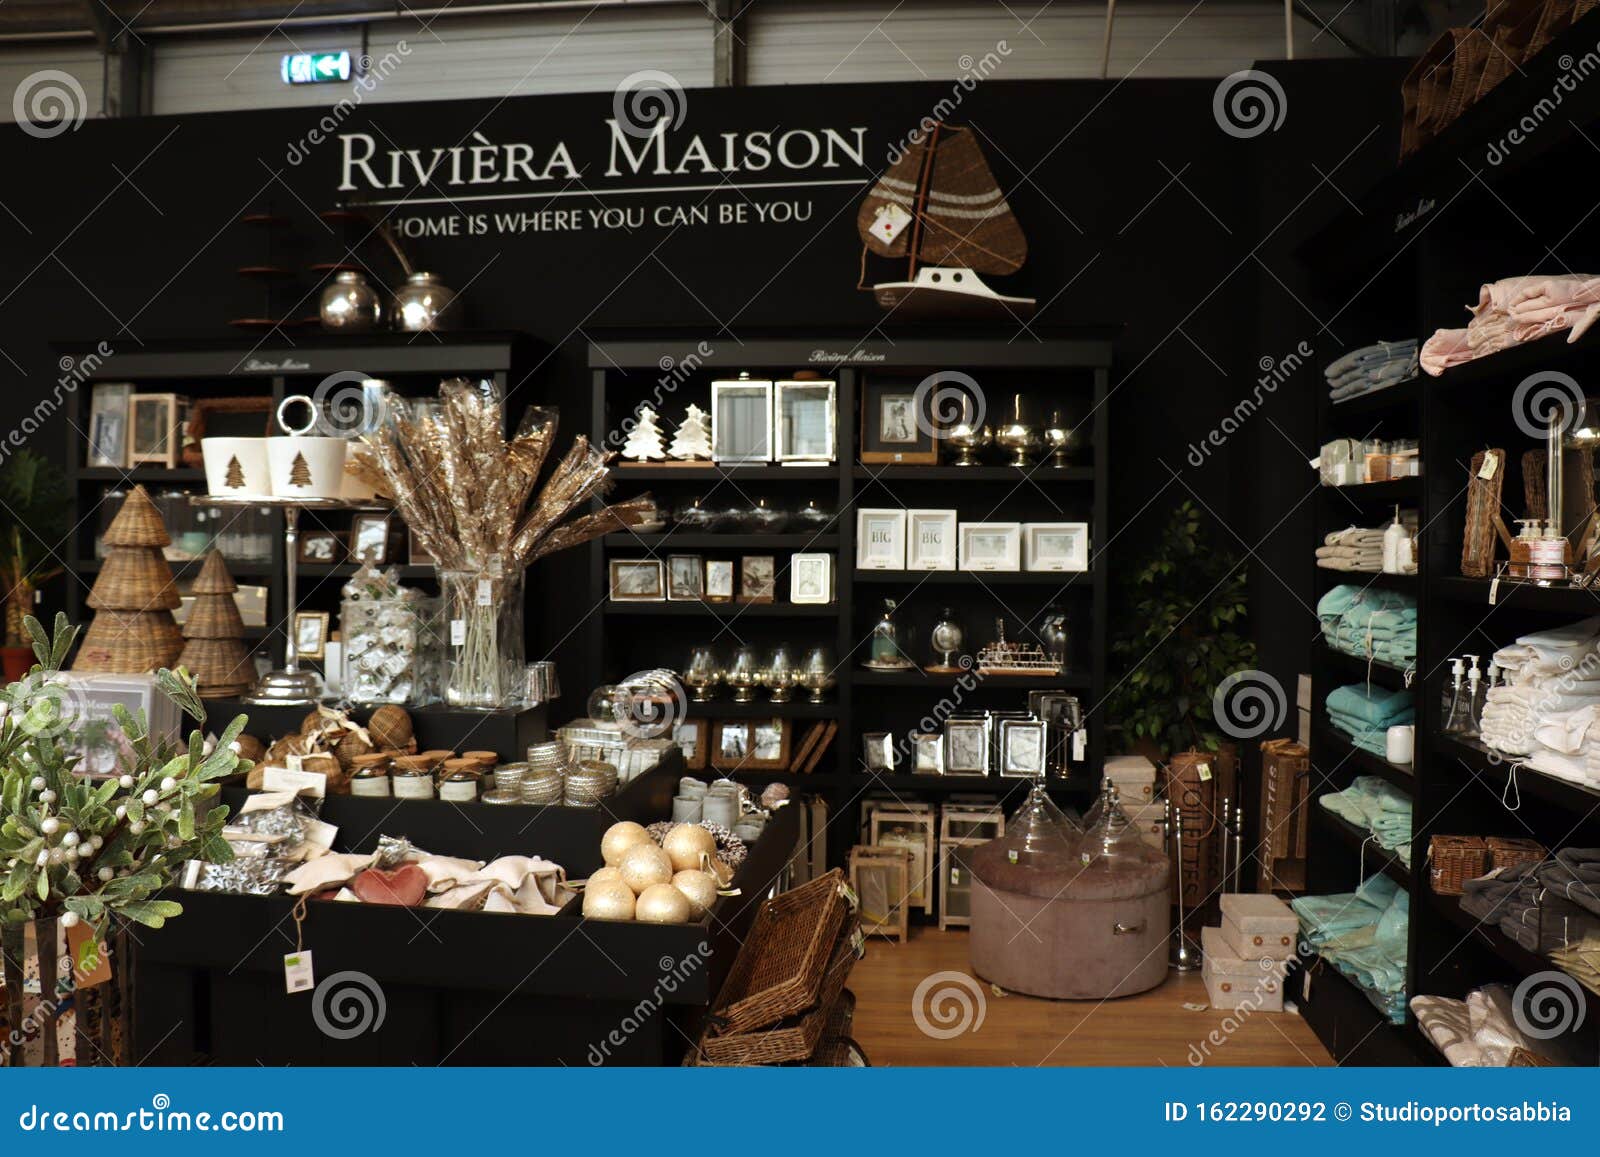 toren Staren Marine Cruquius, the Netherlands - October 26th 2018: Riviera Maison Retail  Display in Interior Shop Editorial Photography - Image of shelves,  merchandise: 162290292